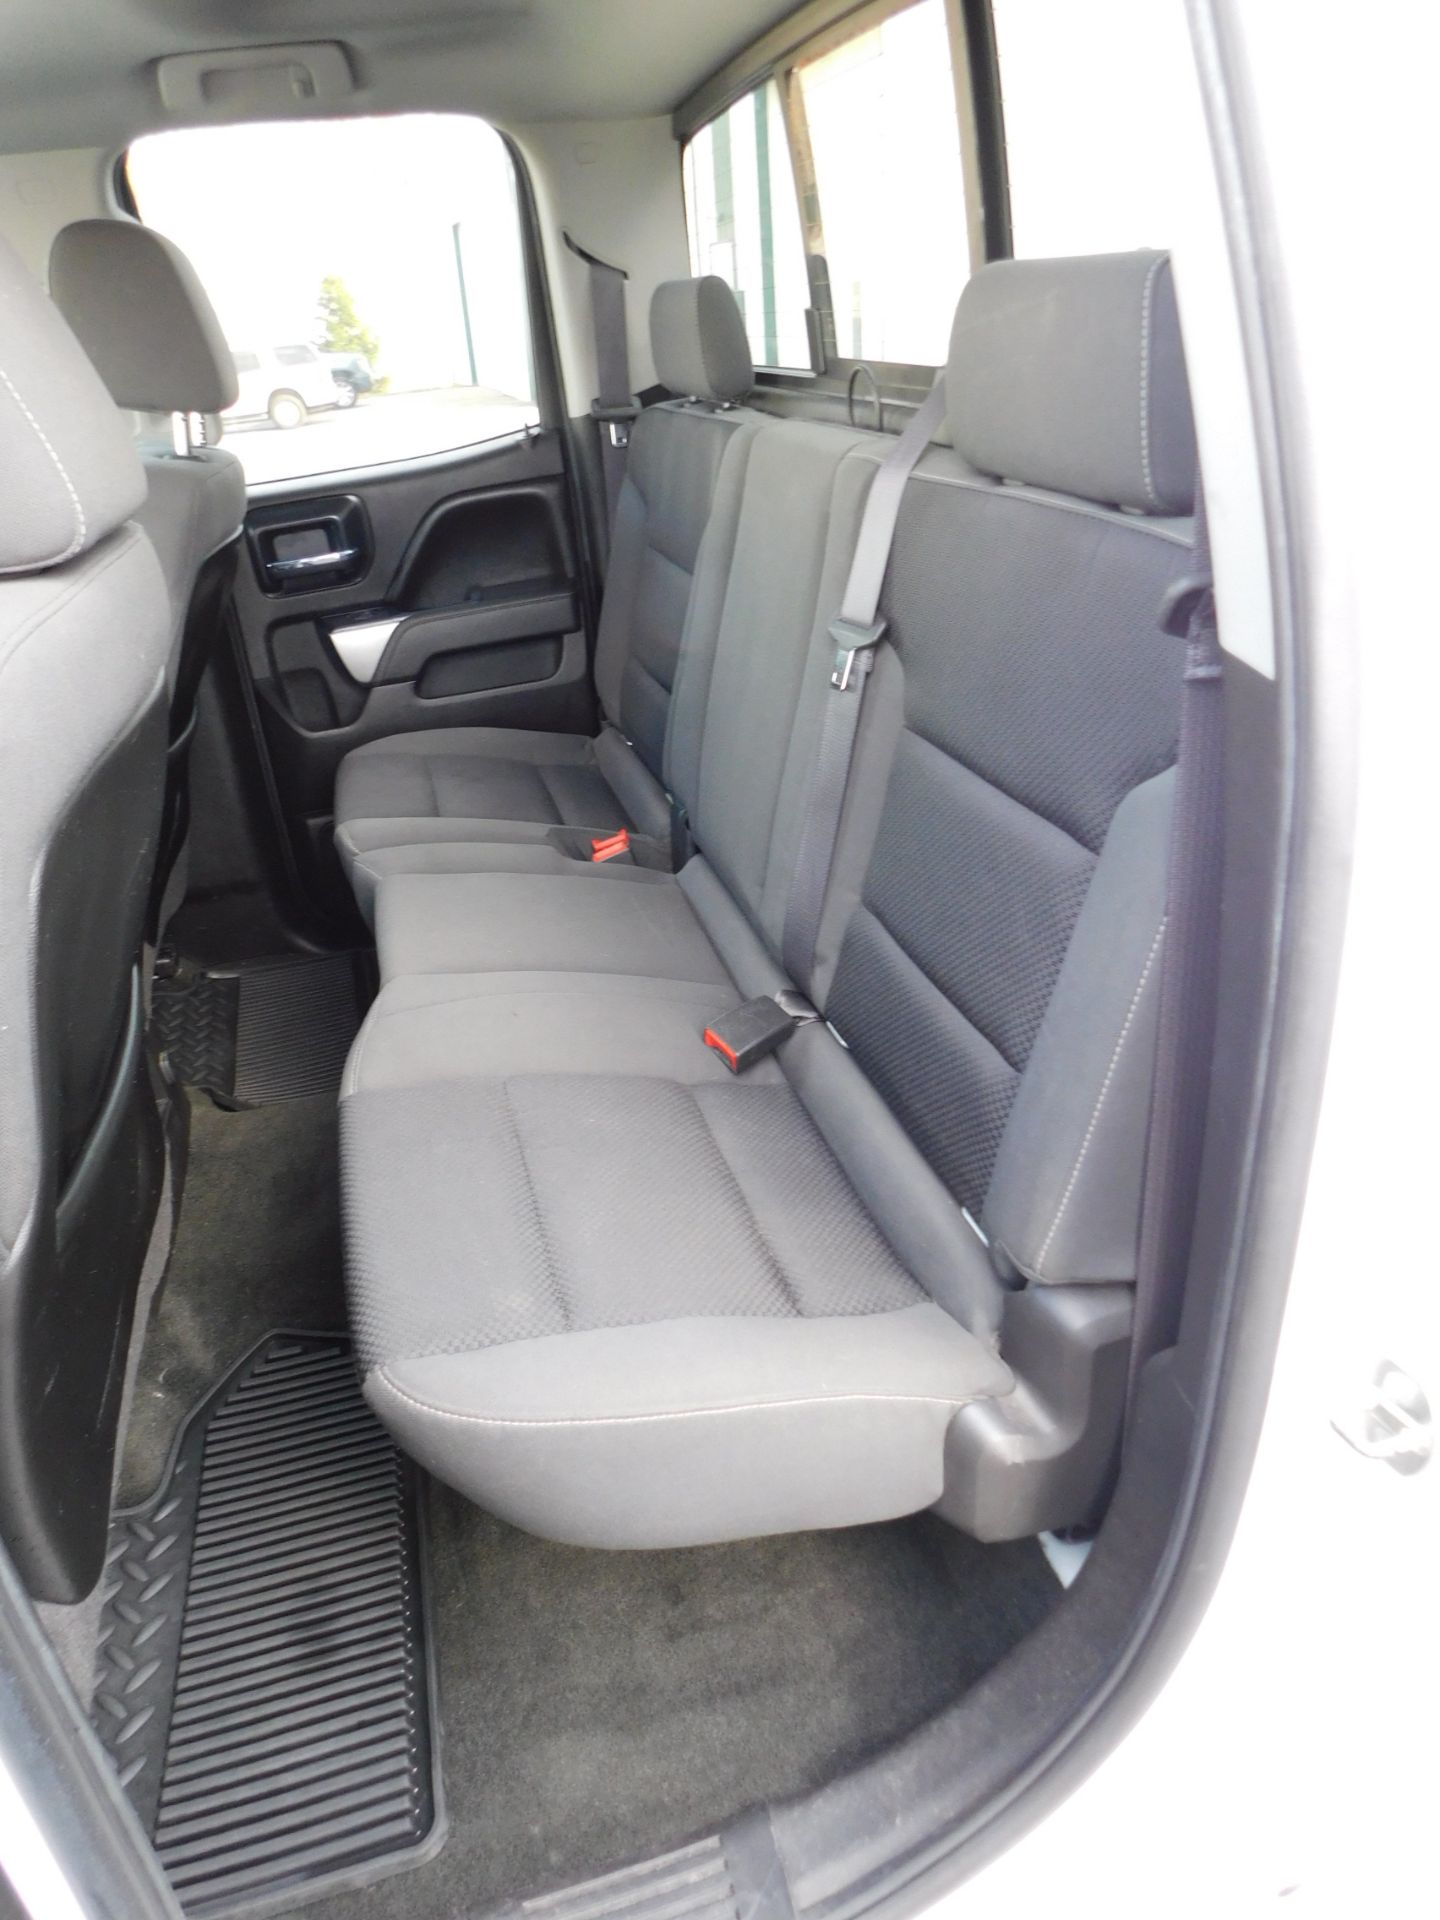 2014 Chevrolet Silverado LT Pickup, VIN 1GCVKREC3EZ139405, 4-Door 4 WD, Automatic, AM/FM, AC, Cruise - Image 33 of 51